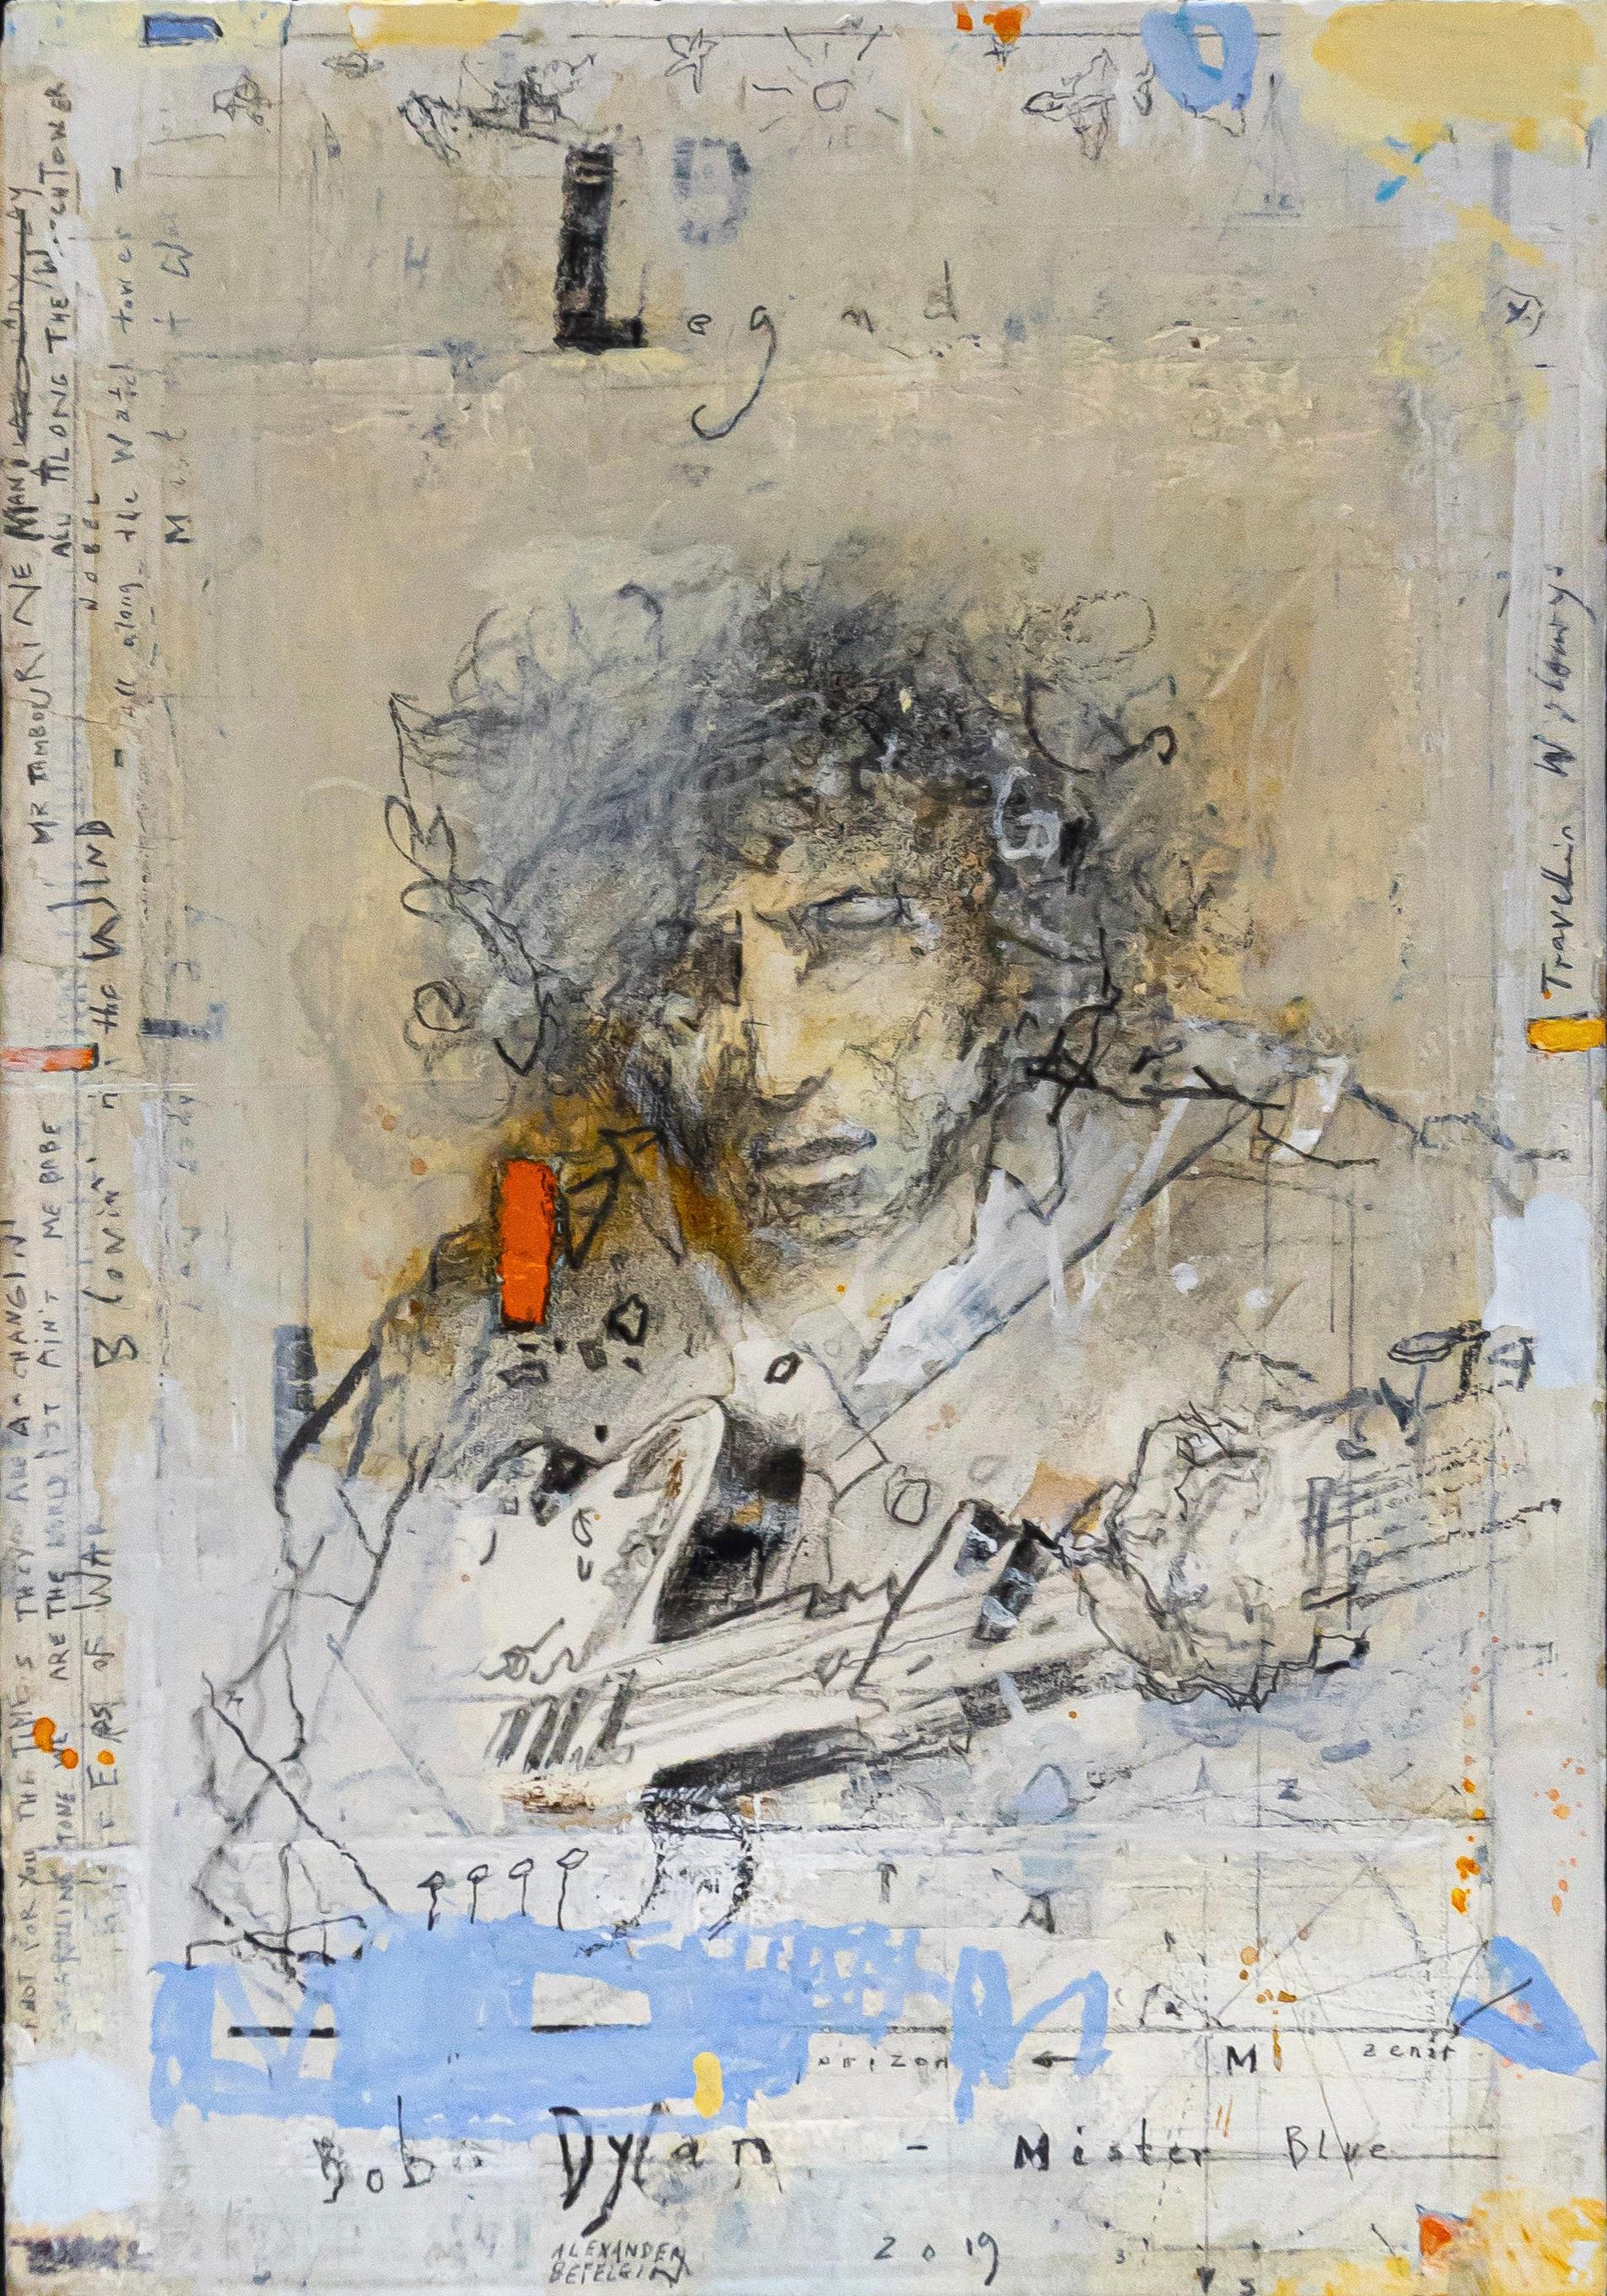 Alexander Befelein Portrait - "Bob Dylan - Legends" 2019 watercolor on paper - musician guitar music